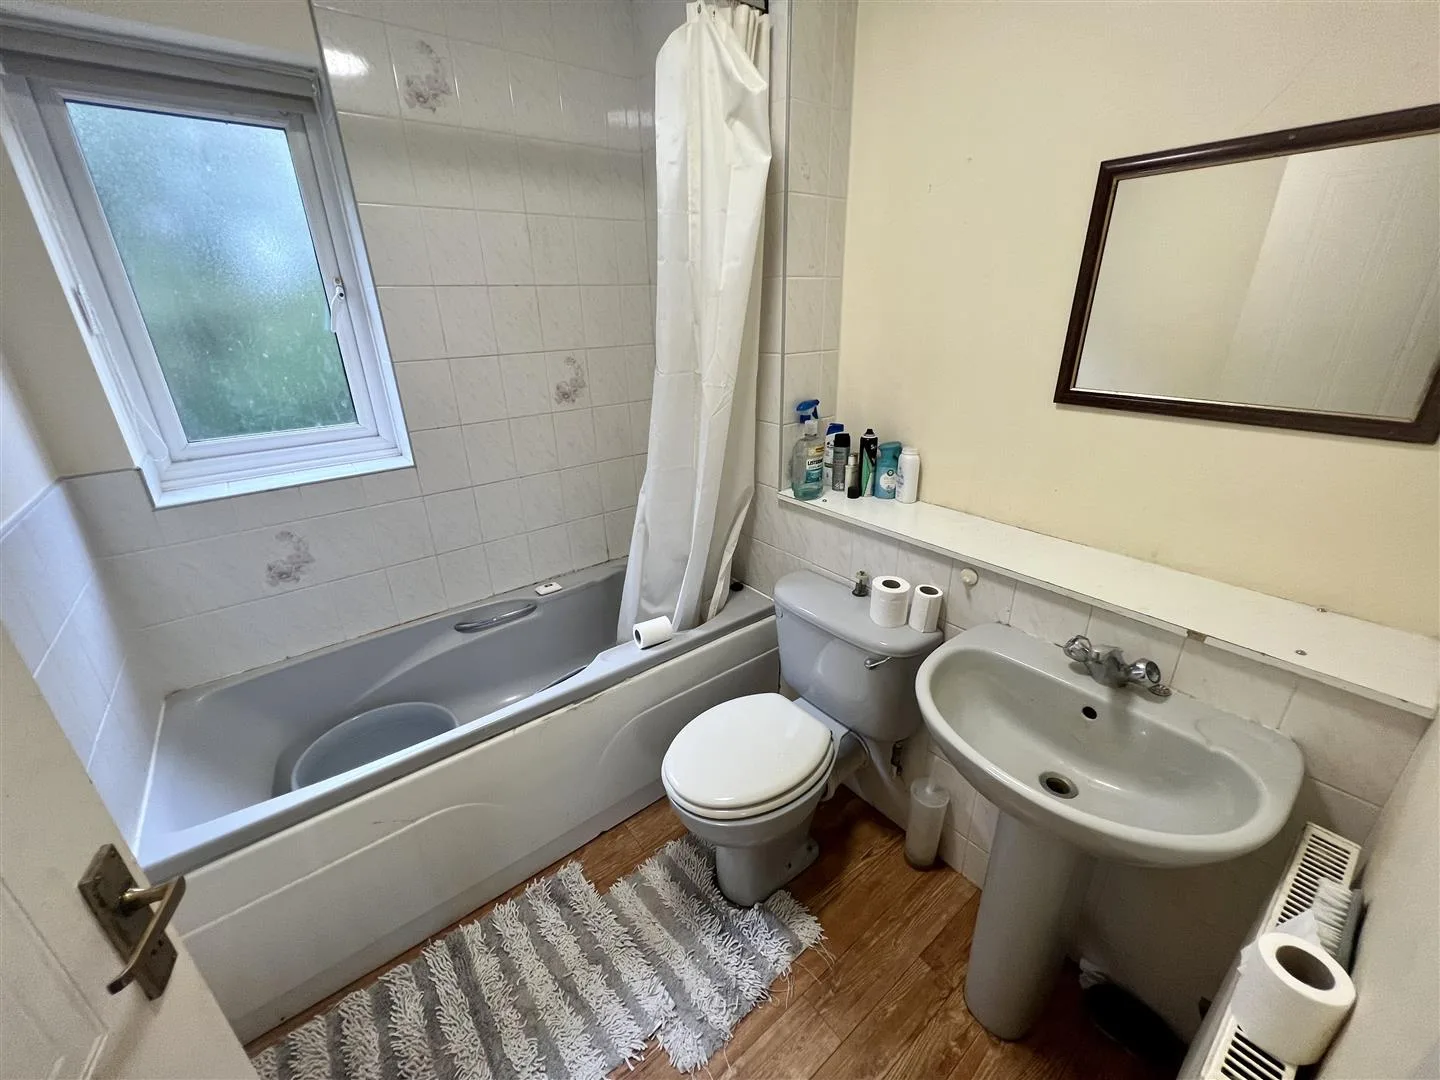 Inside view of a kitchen bathroom with a bathtub